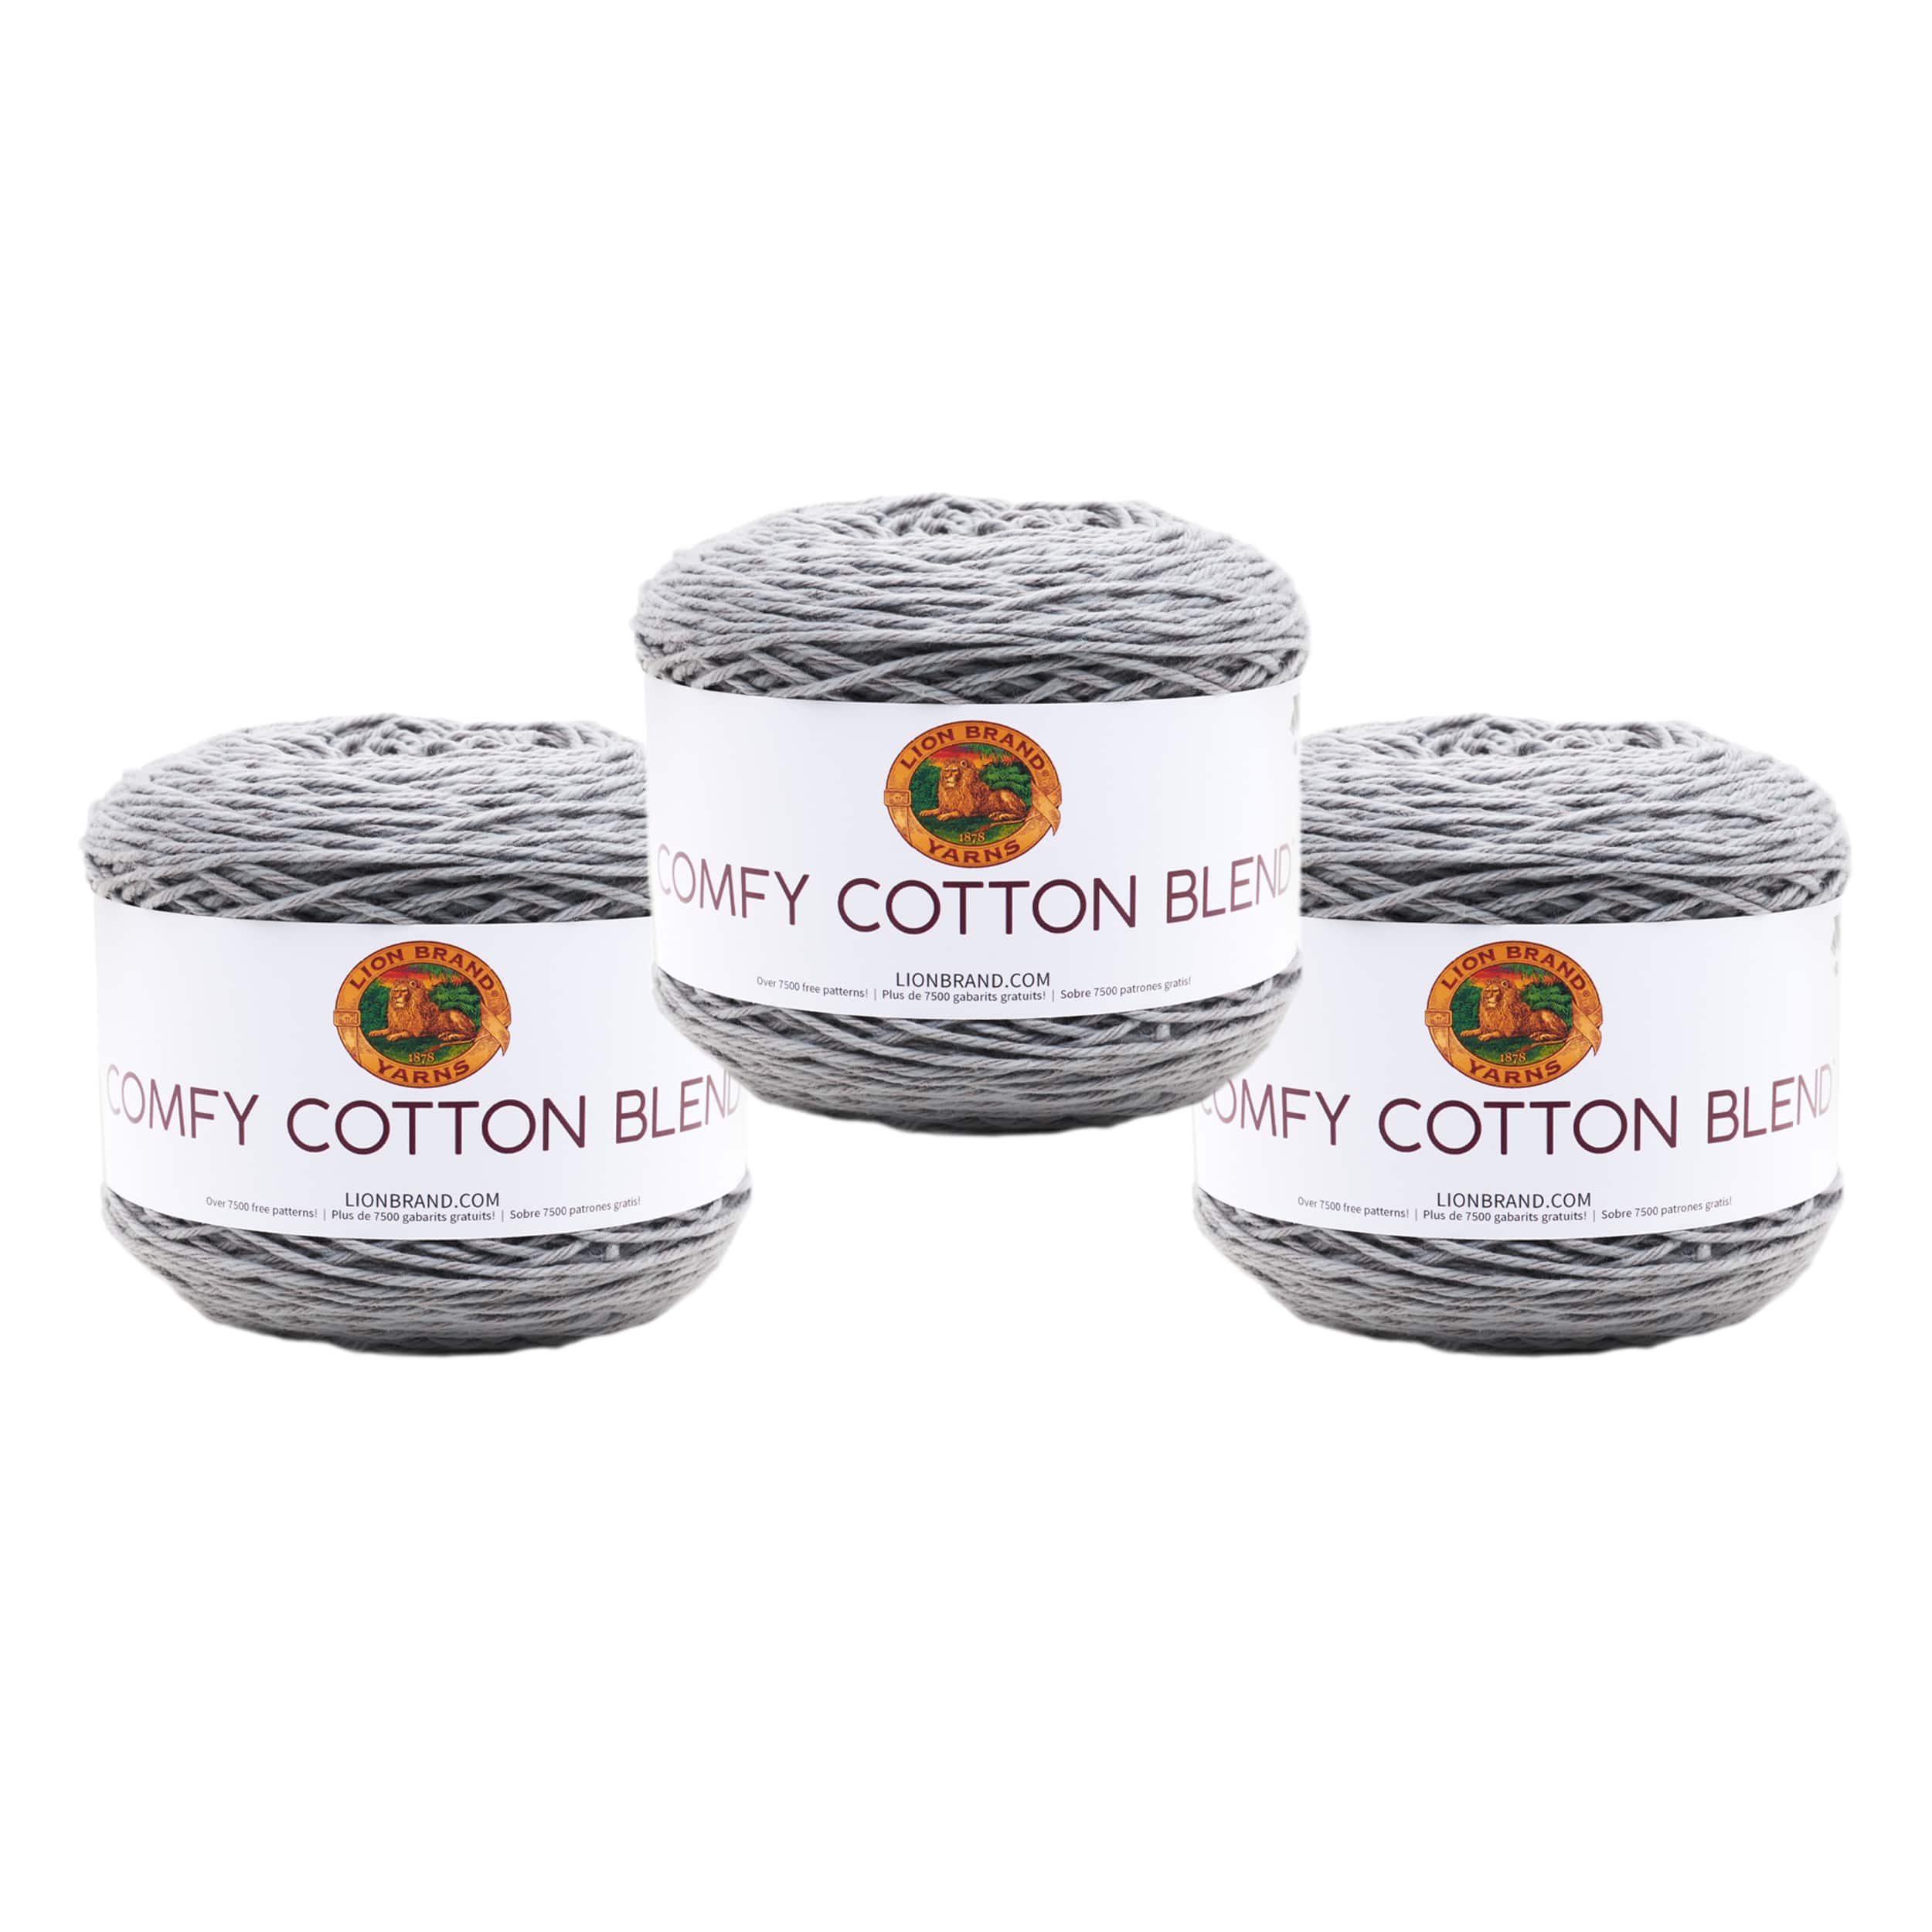 comfy cotton blend yarn